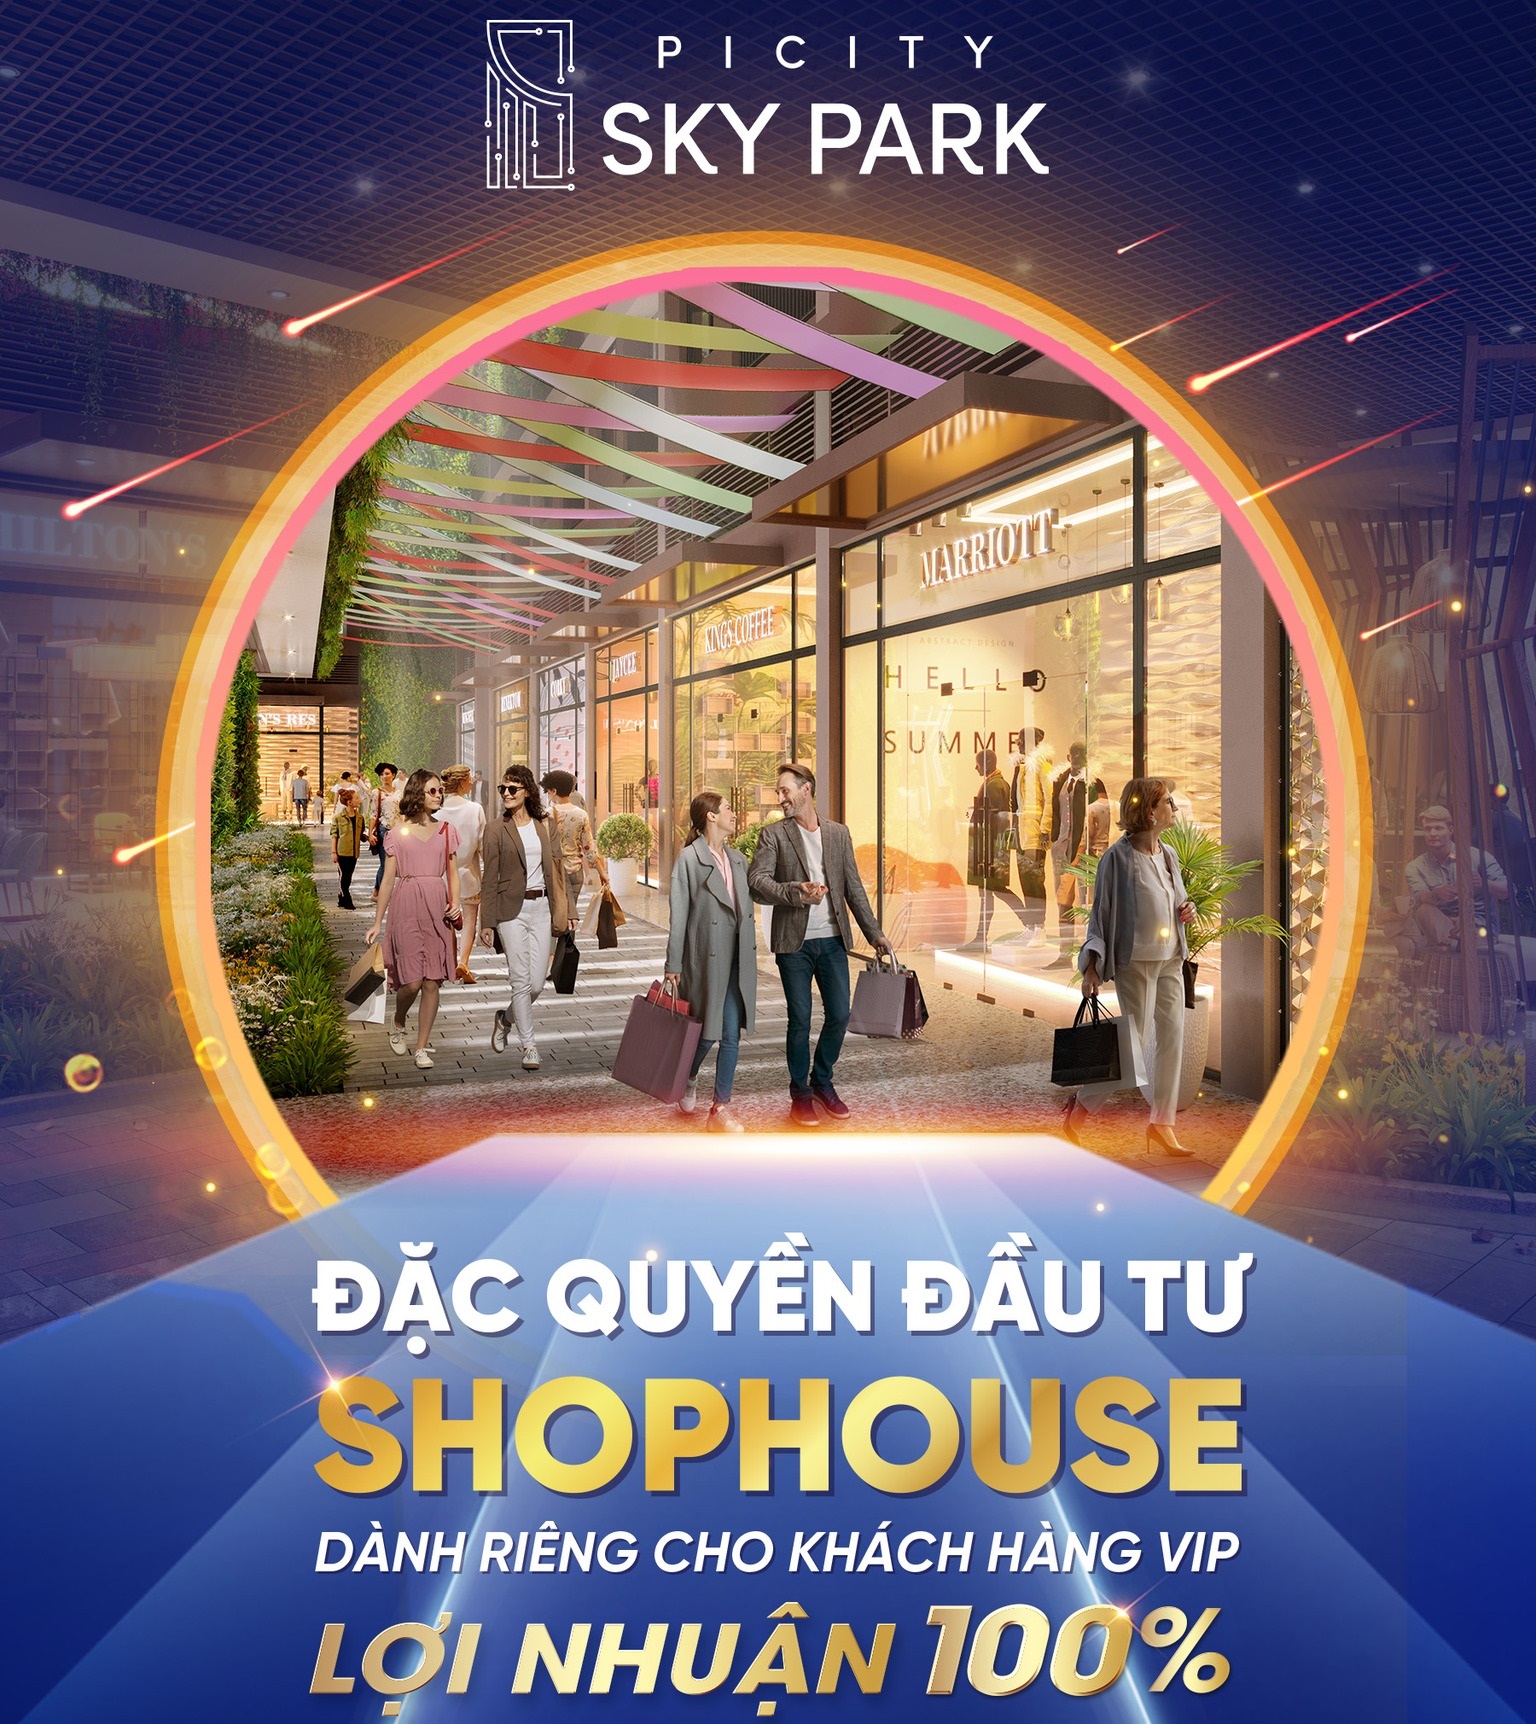 But pha loi nhuan cung Shophouse Picity Sky Park